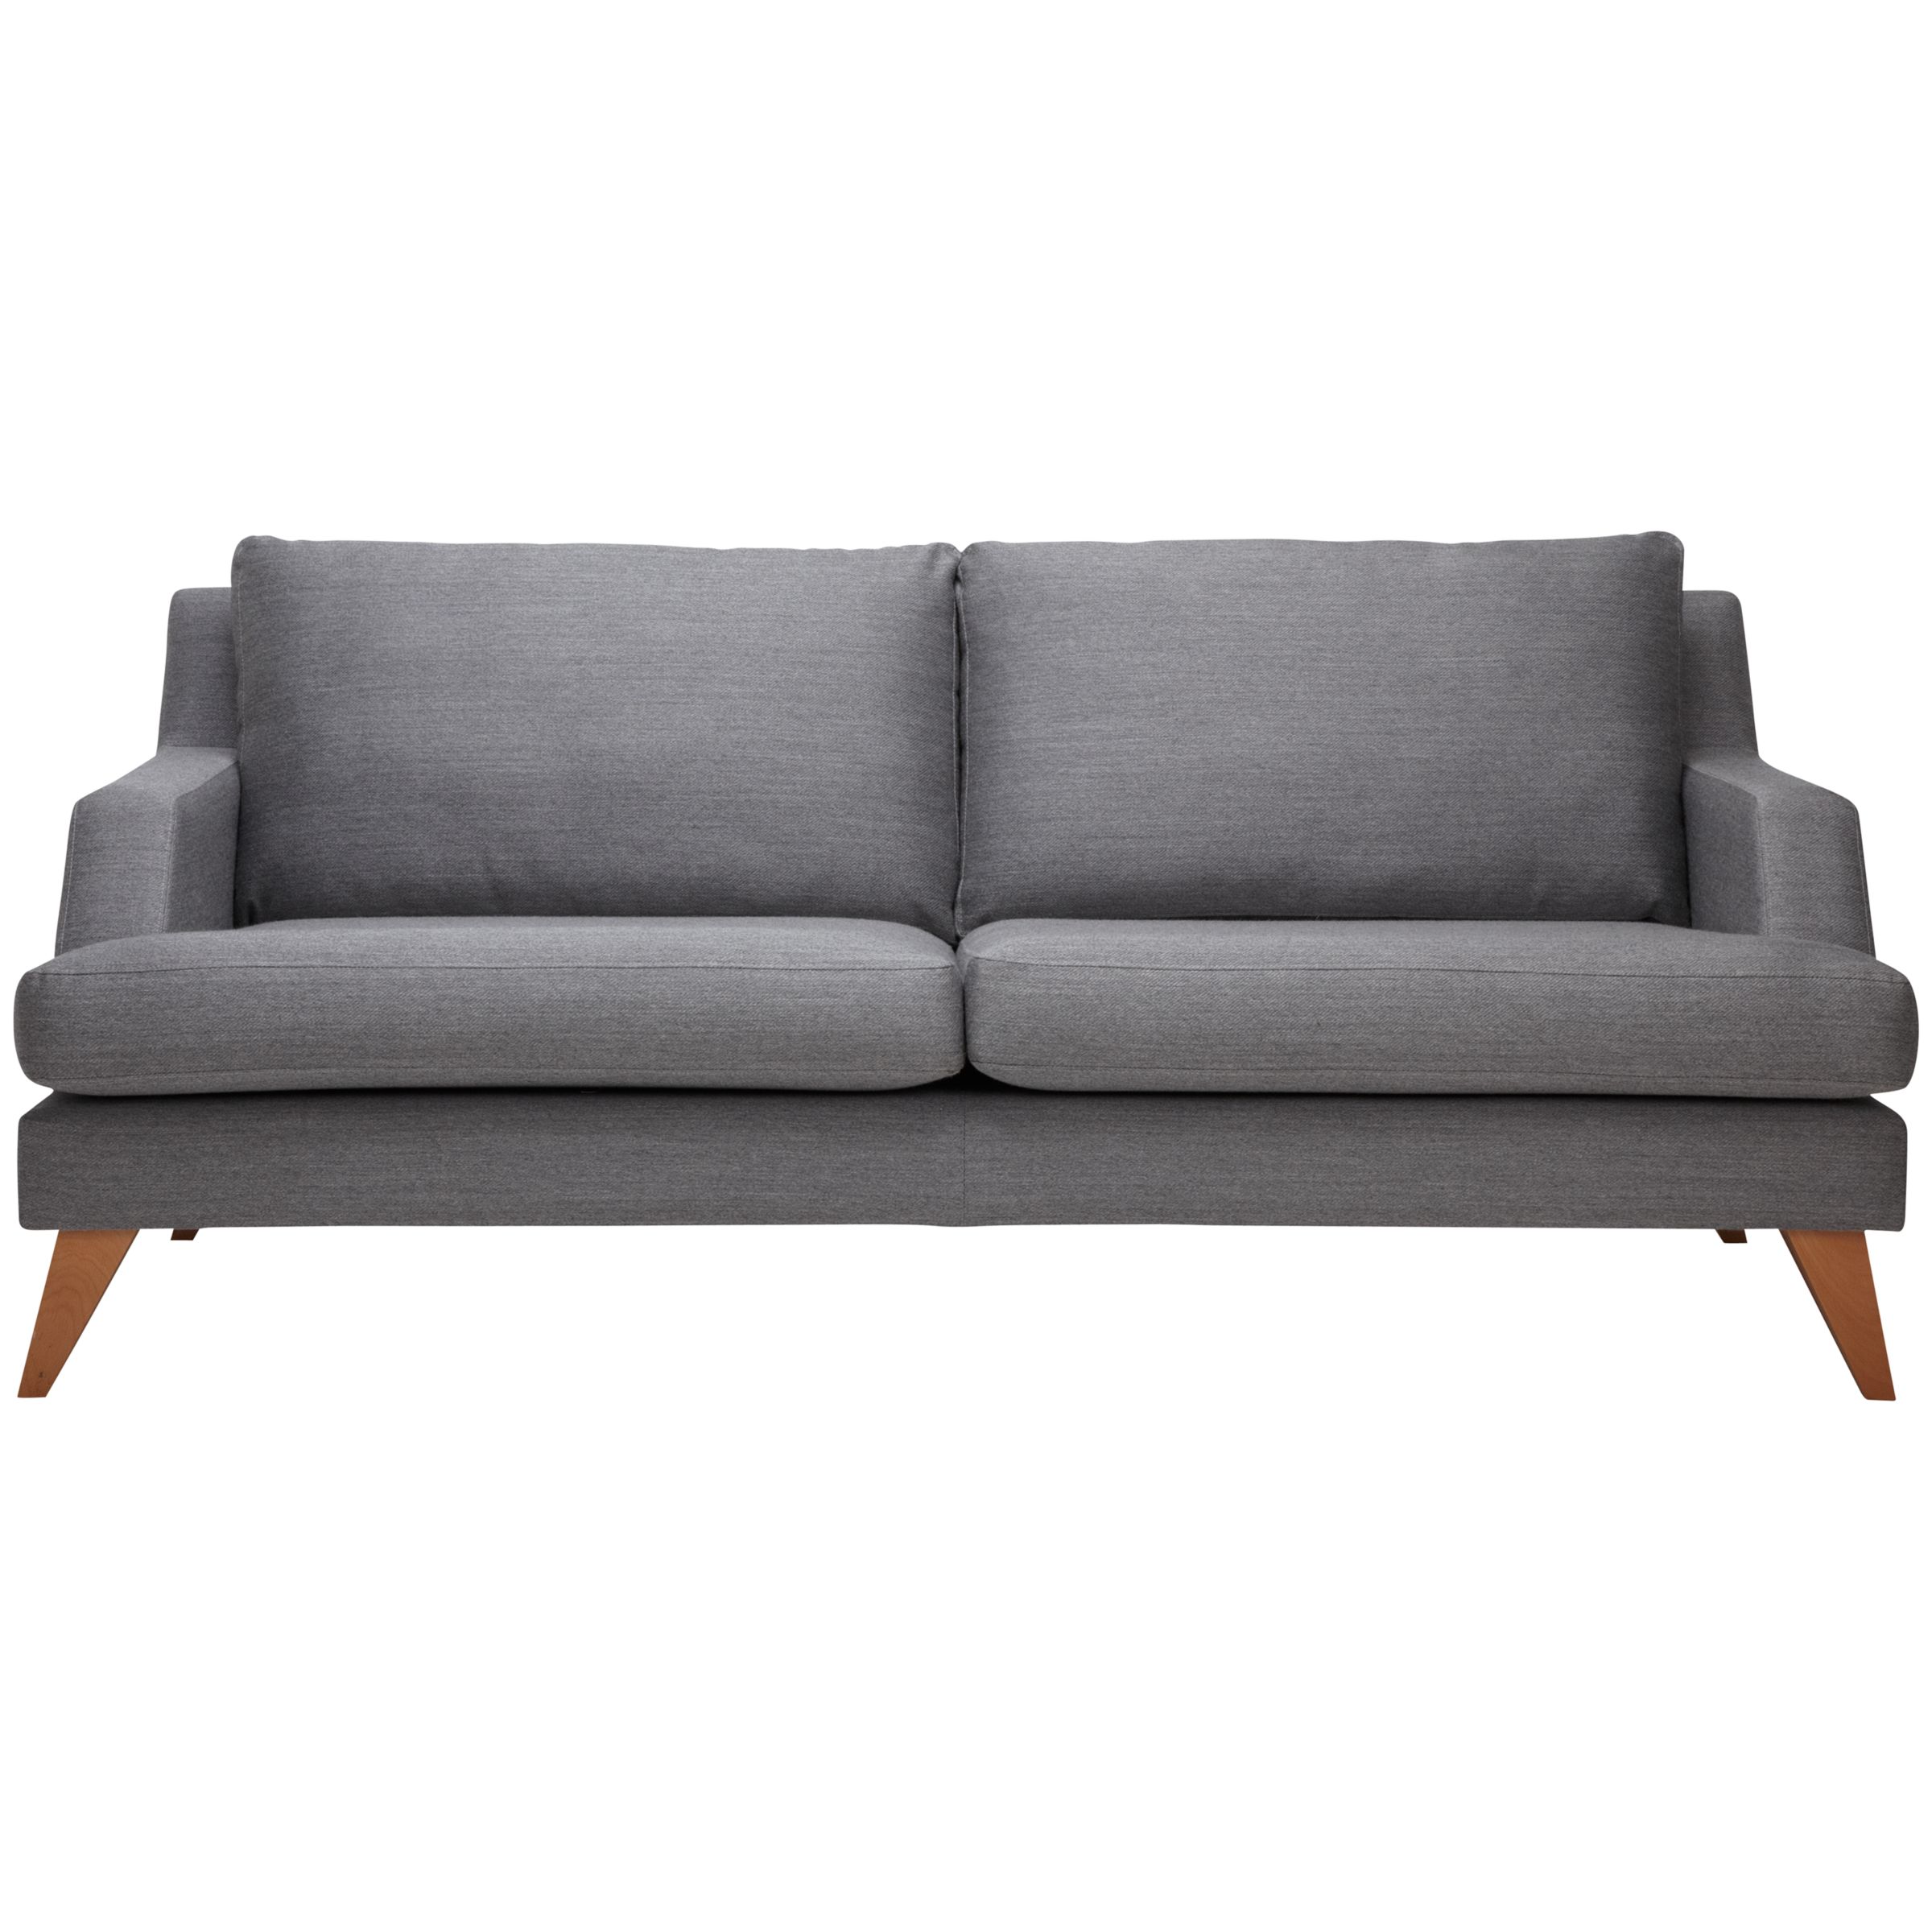 John Lewis Buzz Large Sofa, Felt Silver, width 192cm